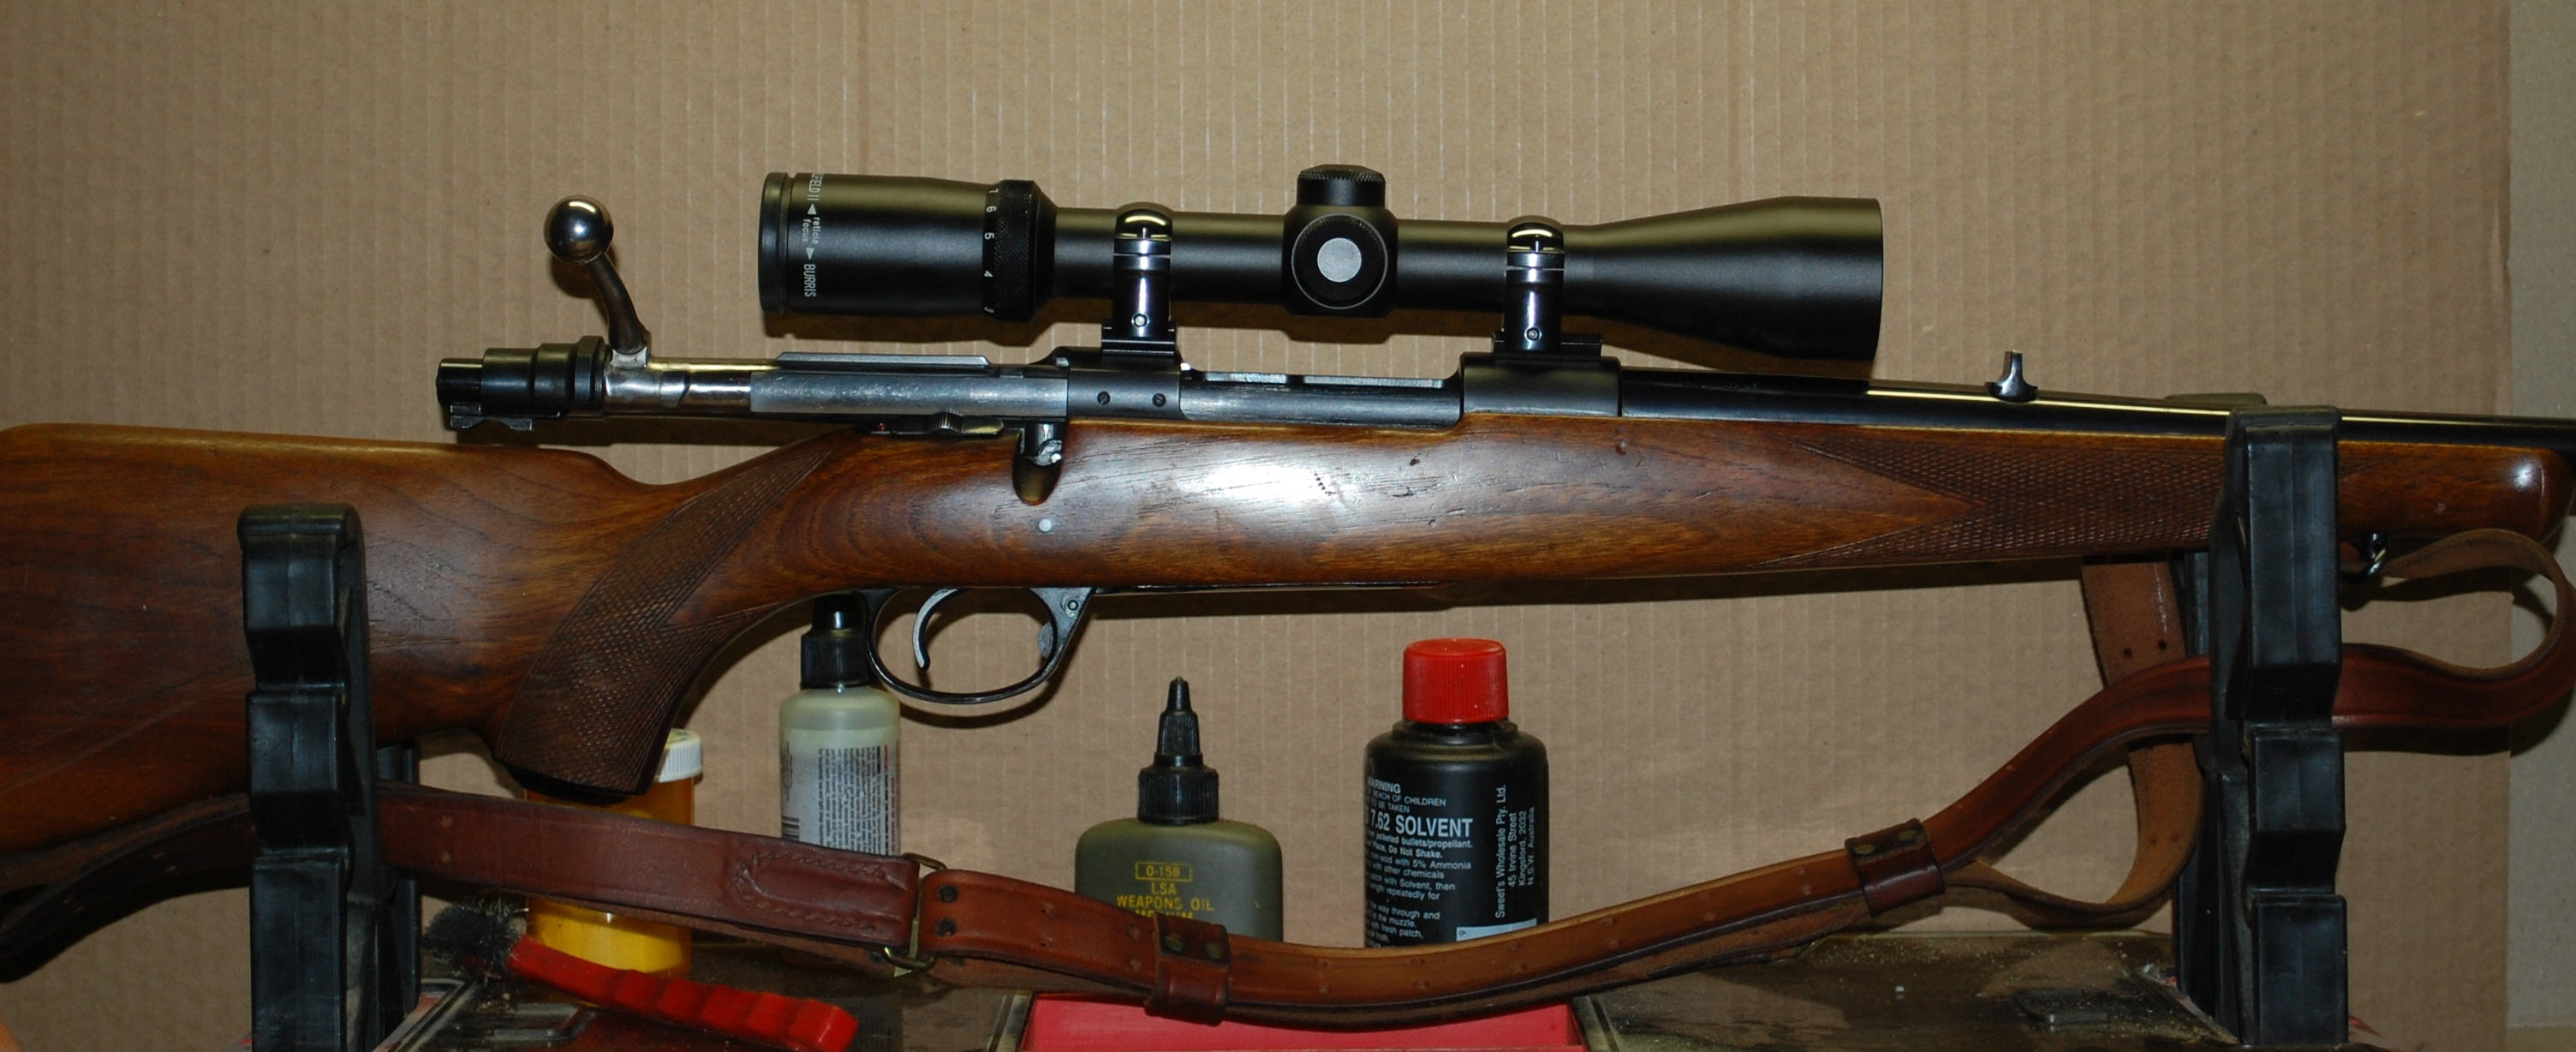 30-06 Hunting Rifle